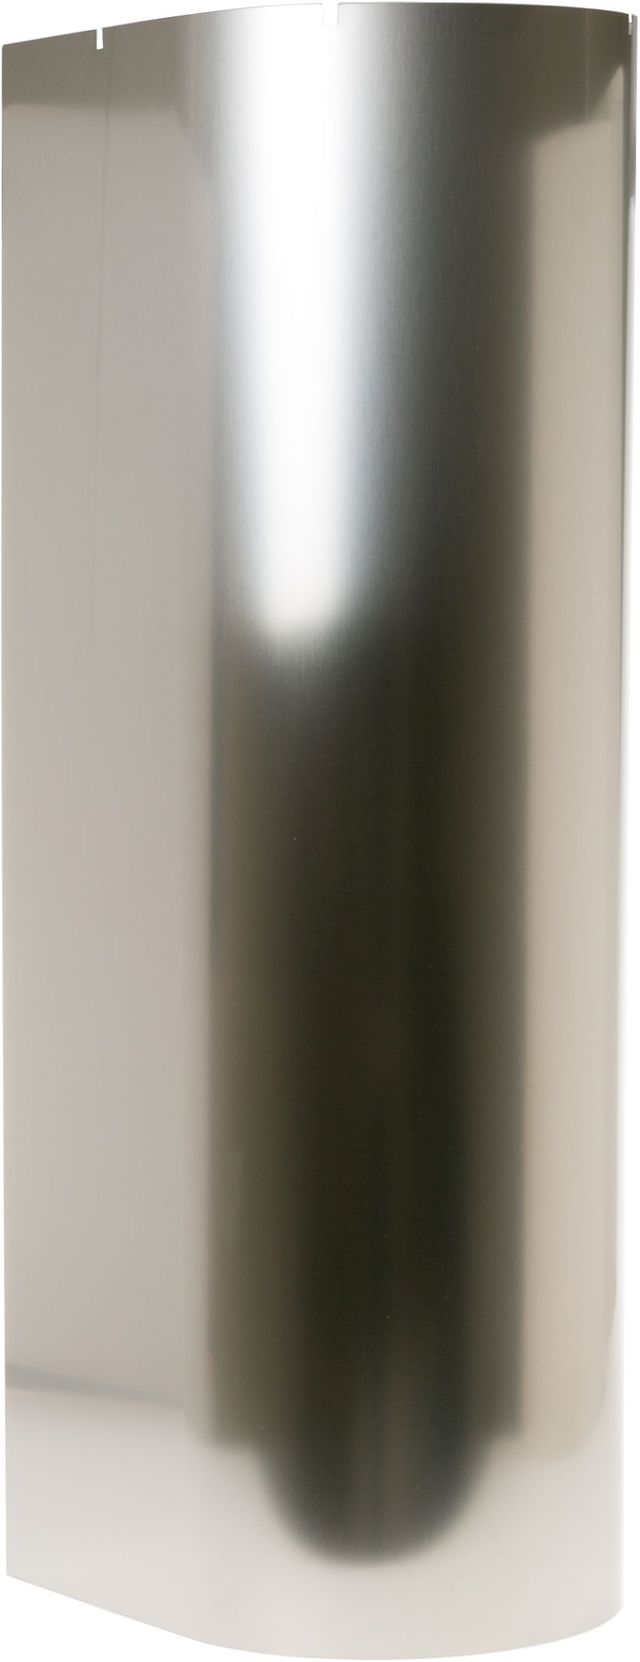 Monogram® 9-10' Ceiling Duct Cover 0